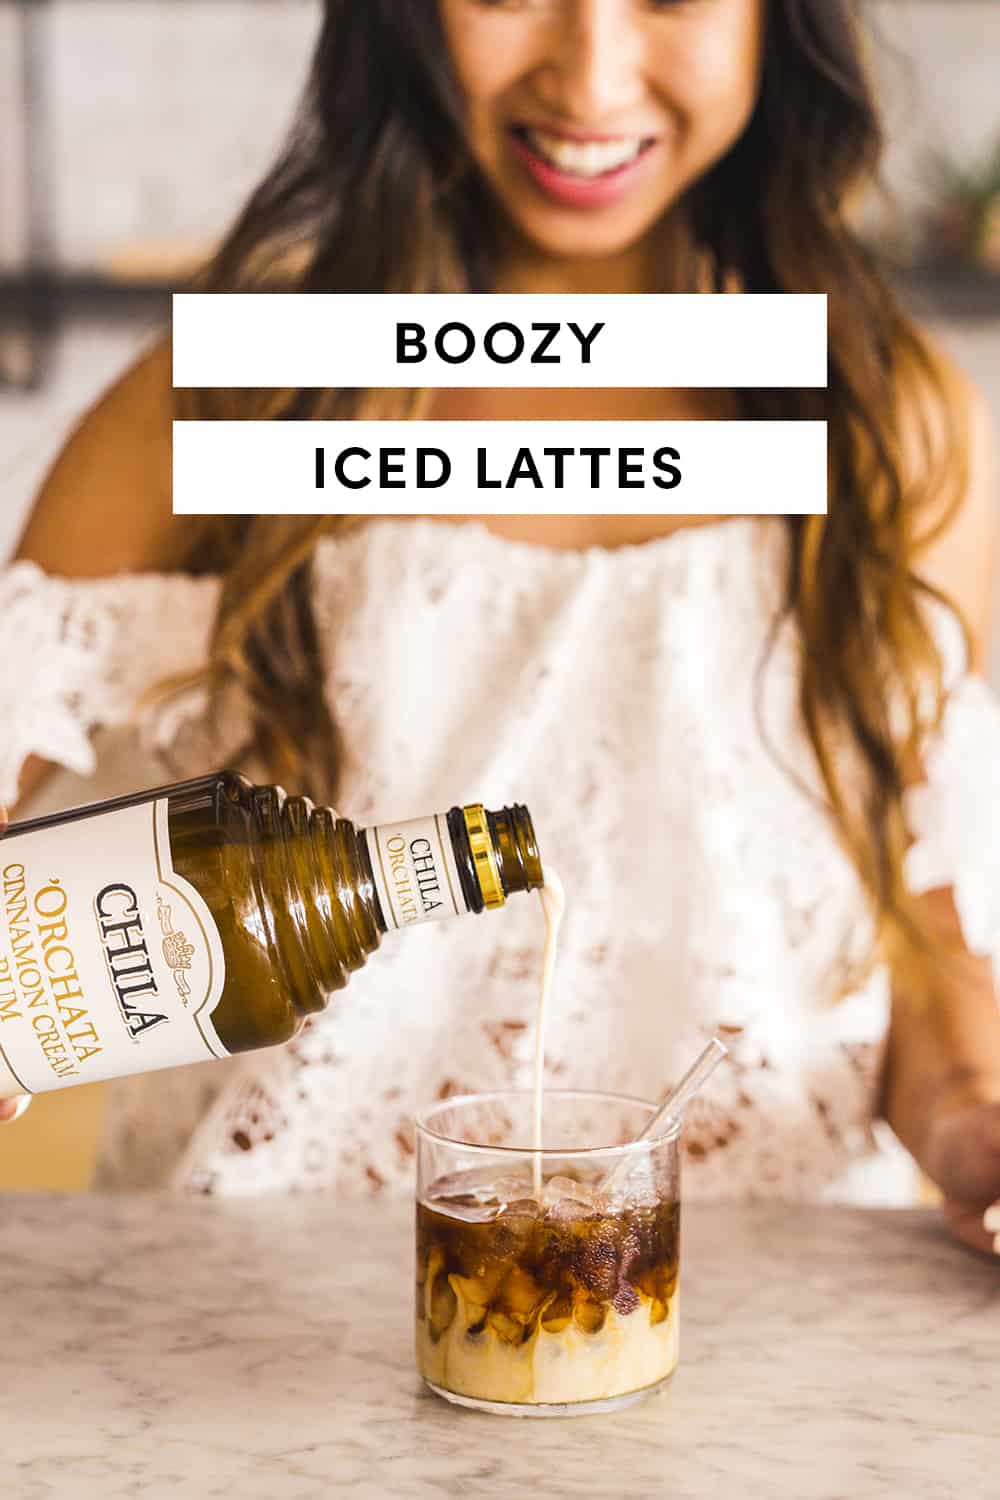 Boozy Iced Lattes